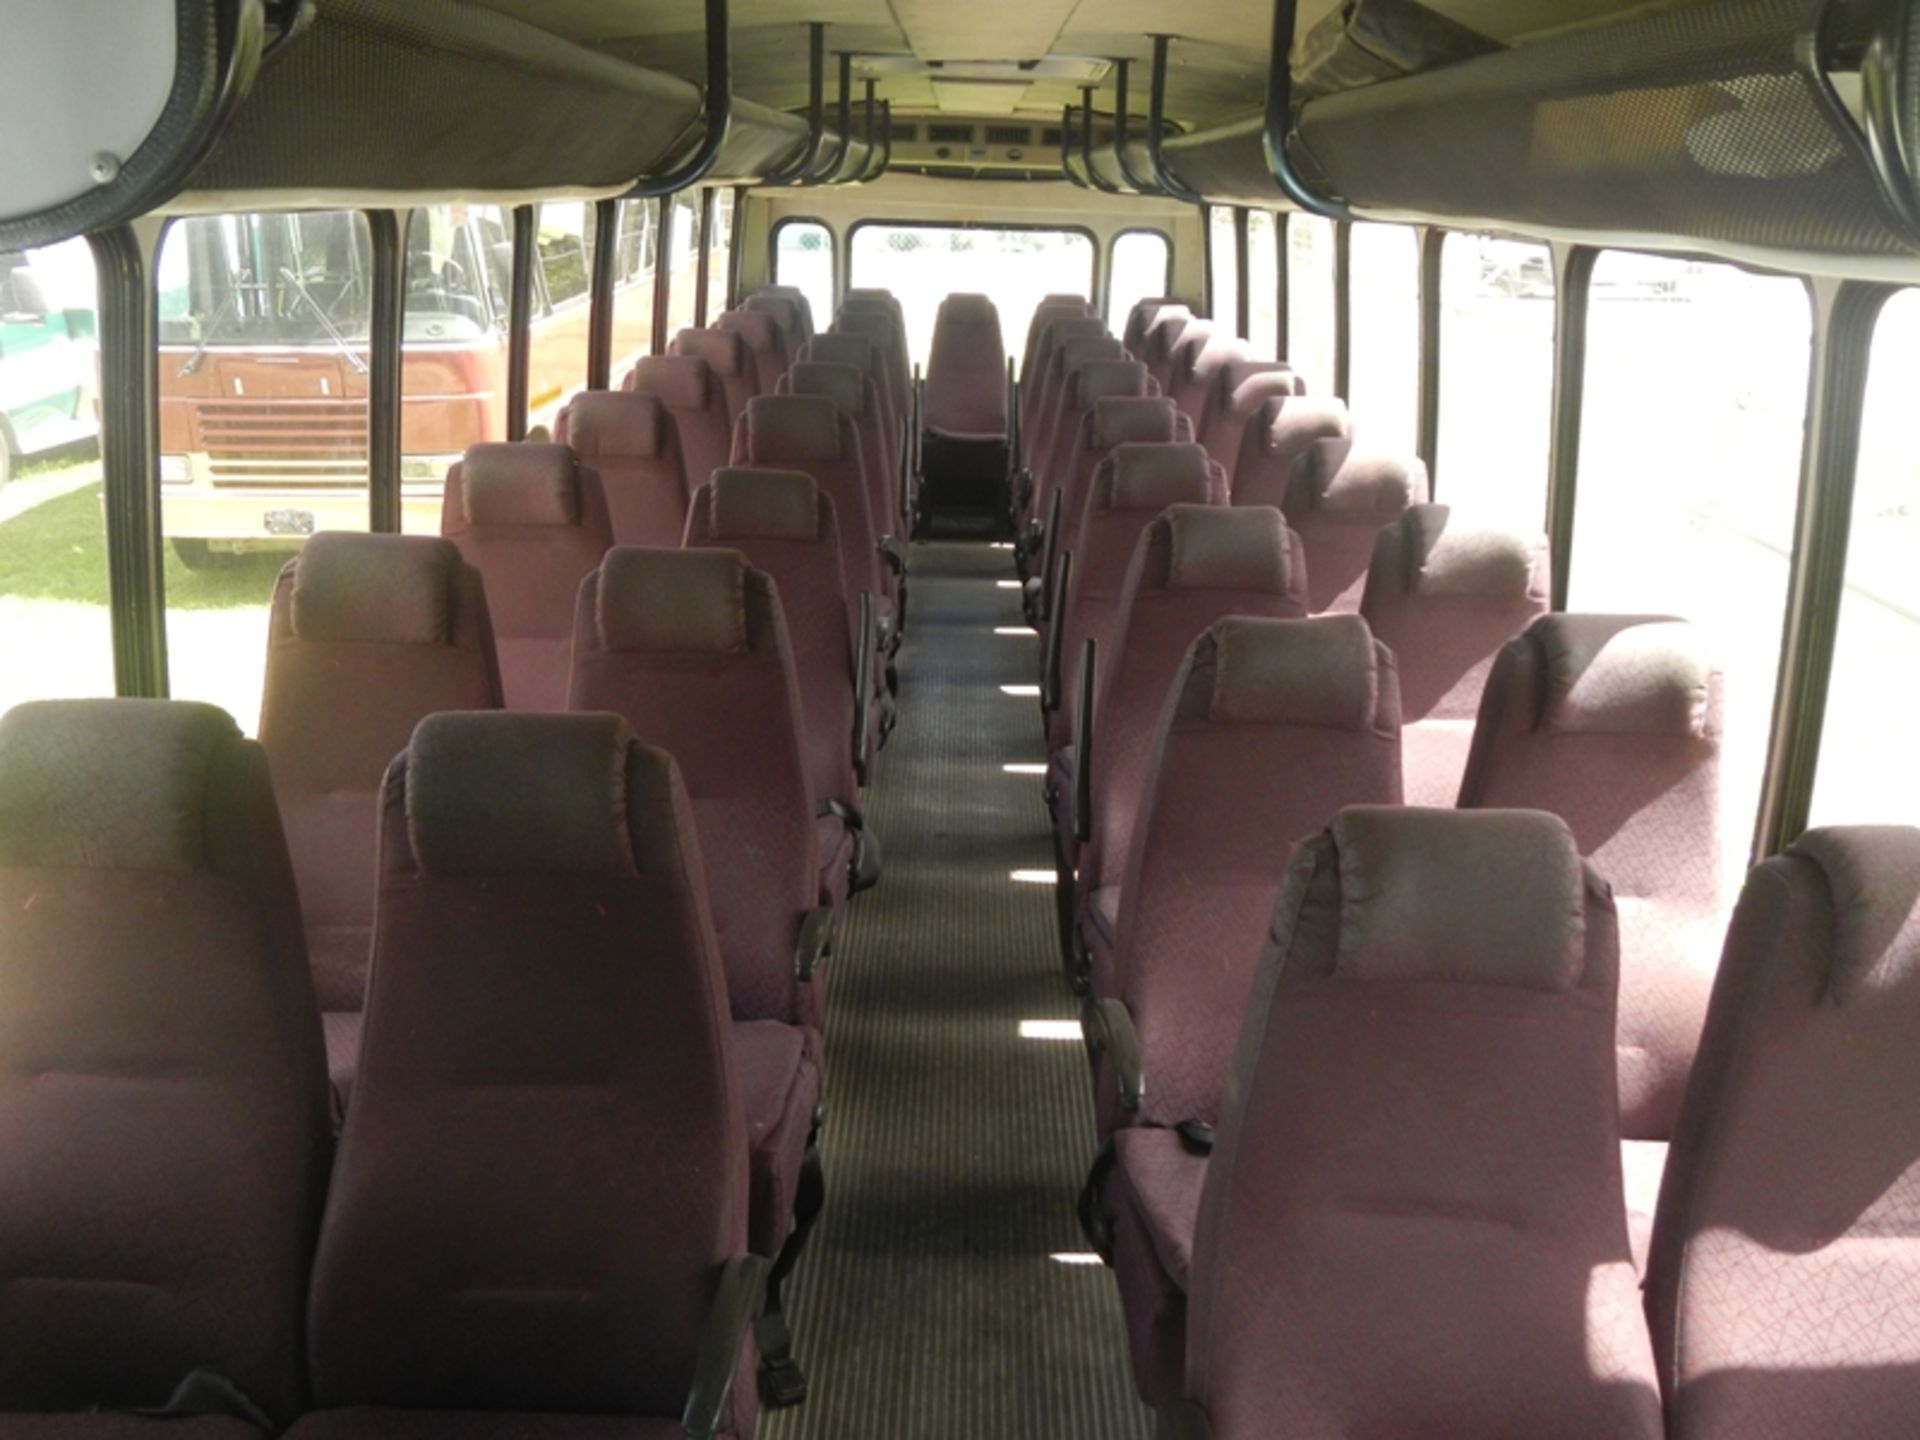 2006 CHEVROLET C5500 40 passenger bus Duramax auto trans - 162,073 miles - VIN: 1GBG5V1256F428122 - Image 7 of 7